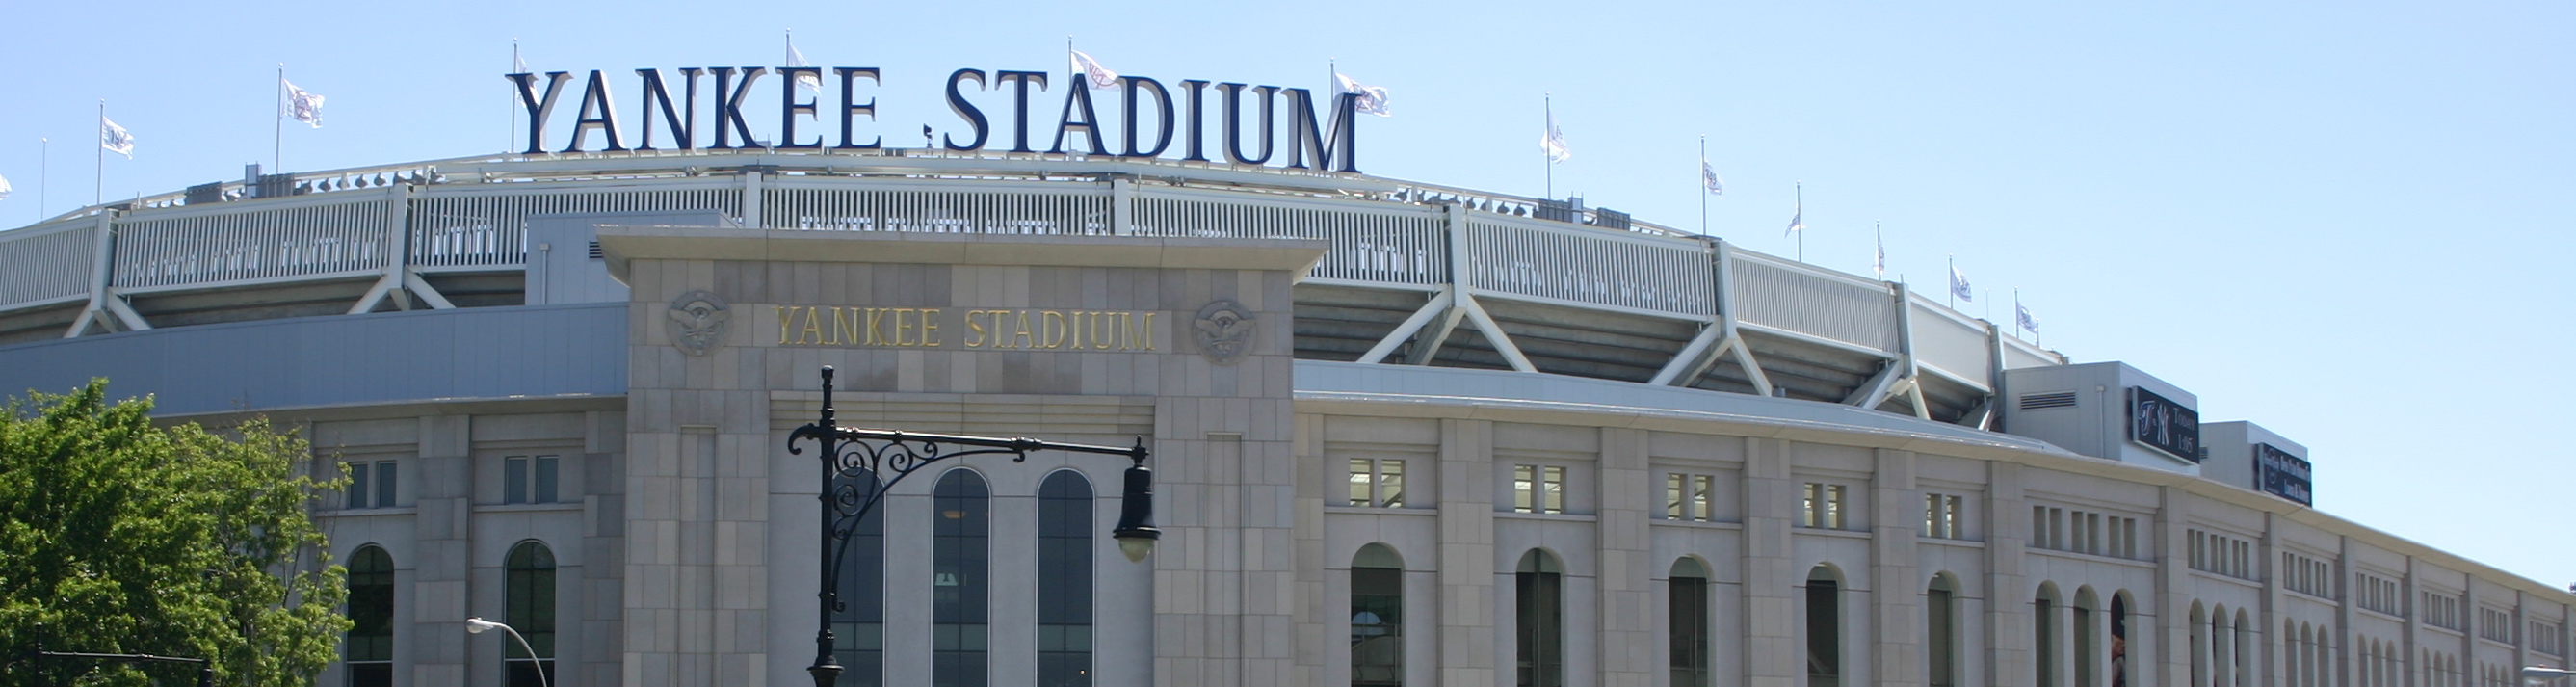 Yankee_Stadium_Exterior